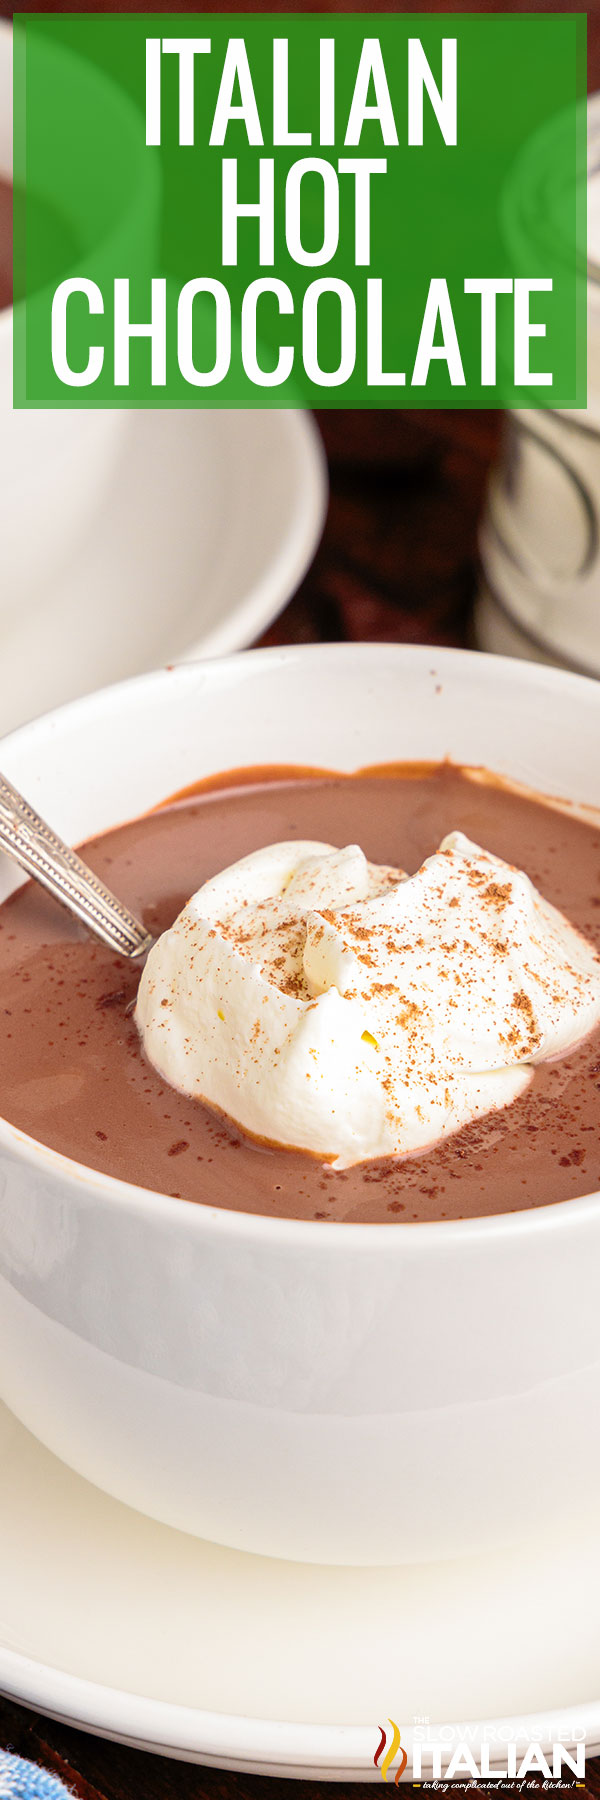 Italian hot chocolate.